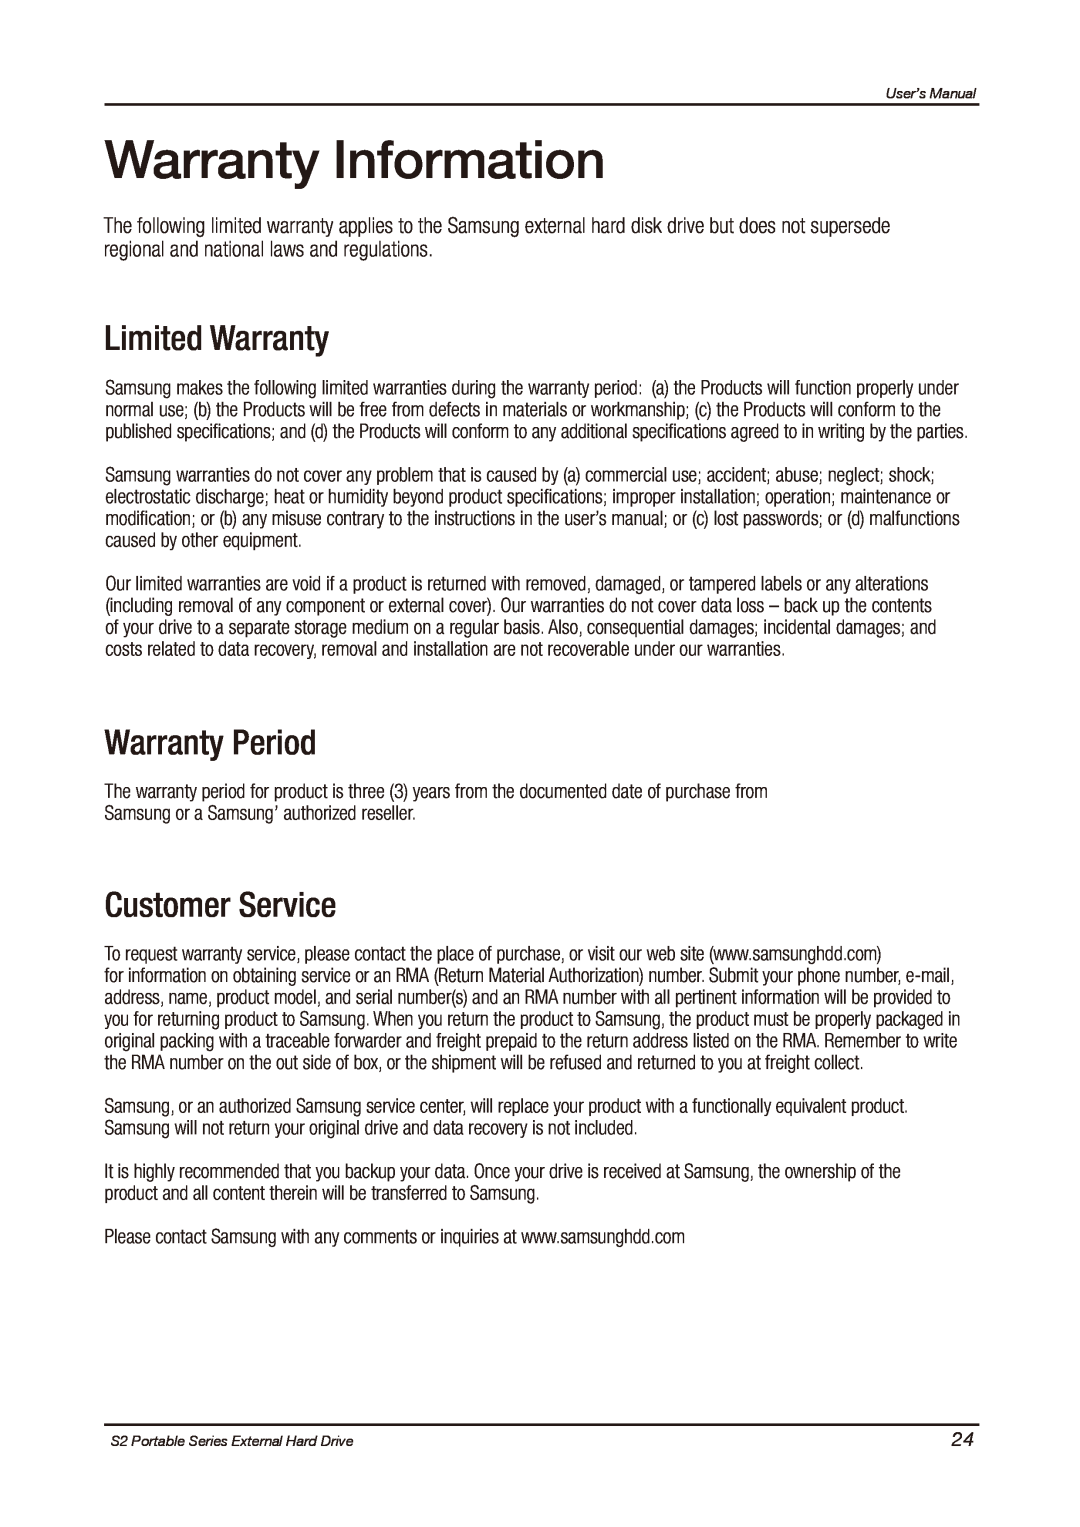 Samsung HXMU016DA, S2 PORTABLE 3.0 user manual Warranty Information, Limited Warranty, Warranty Period, Customer Service 